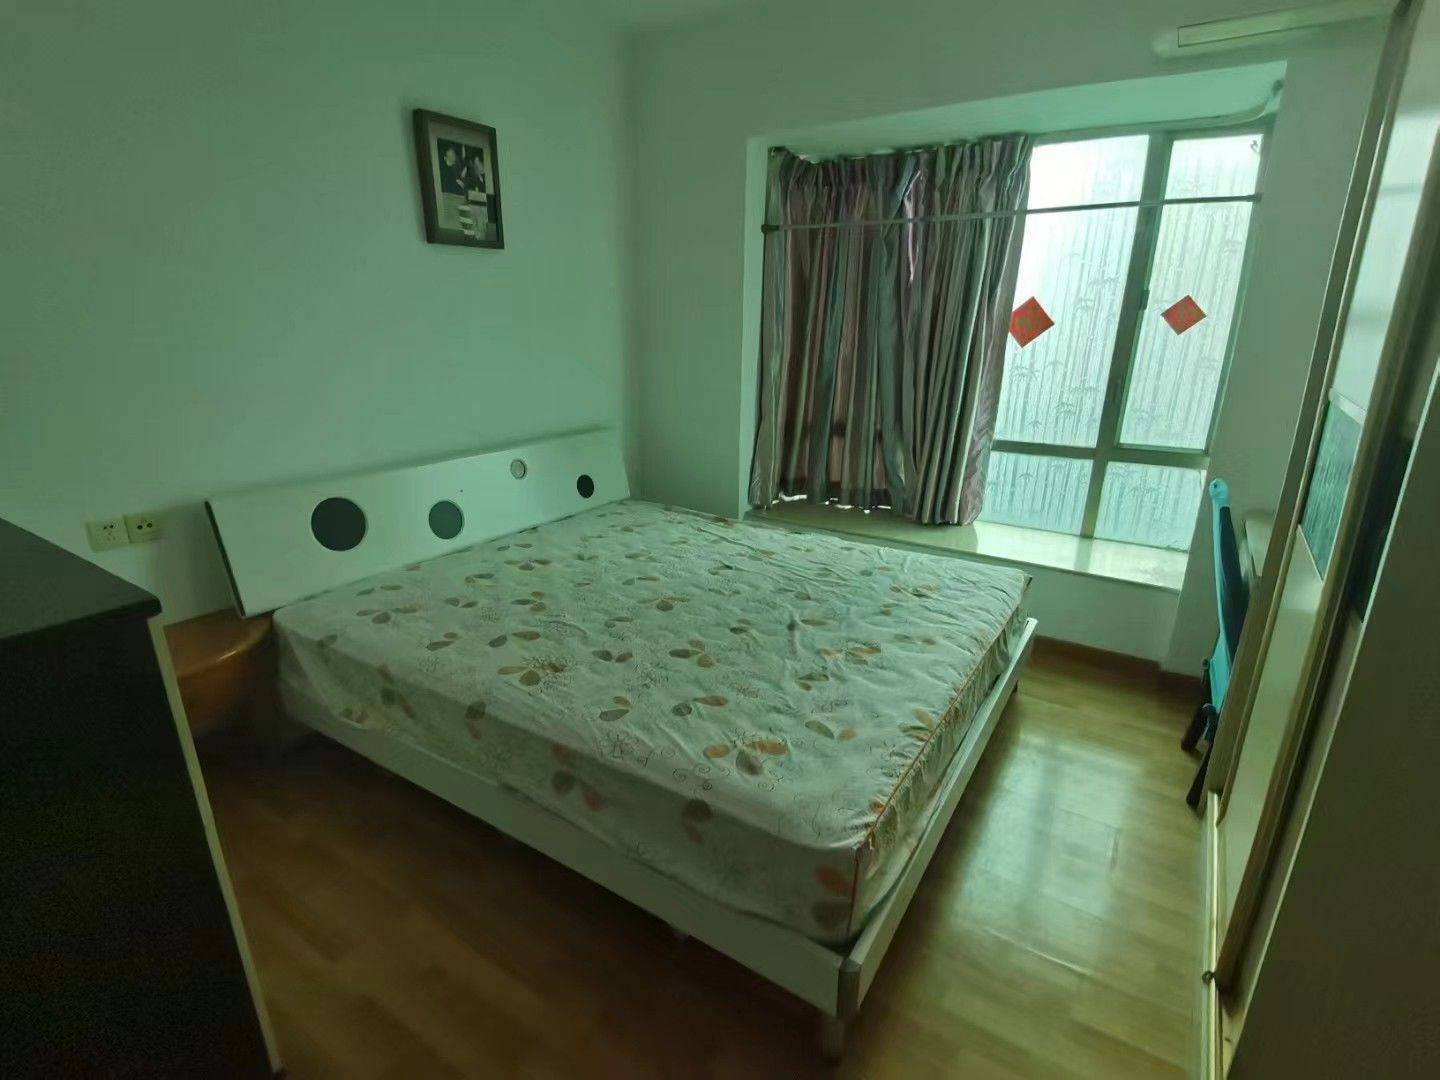 Guangzhou-Haizhu-Cozy Home,Clean&Comfy,No Gender Limit,Hustle & Bustle,“Friends”,Chilled,LGBTQ Friendly